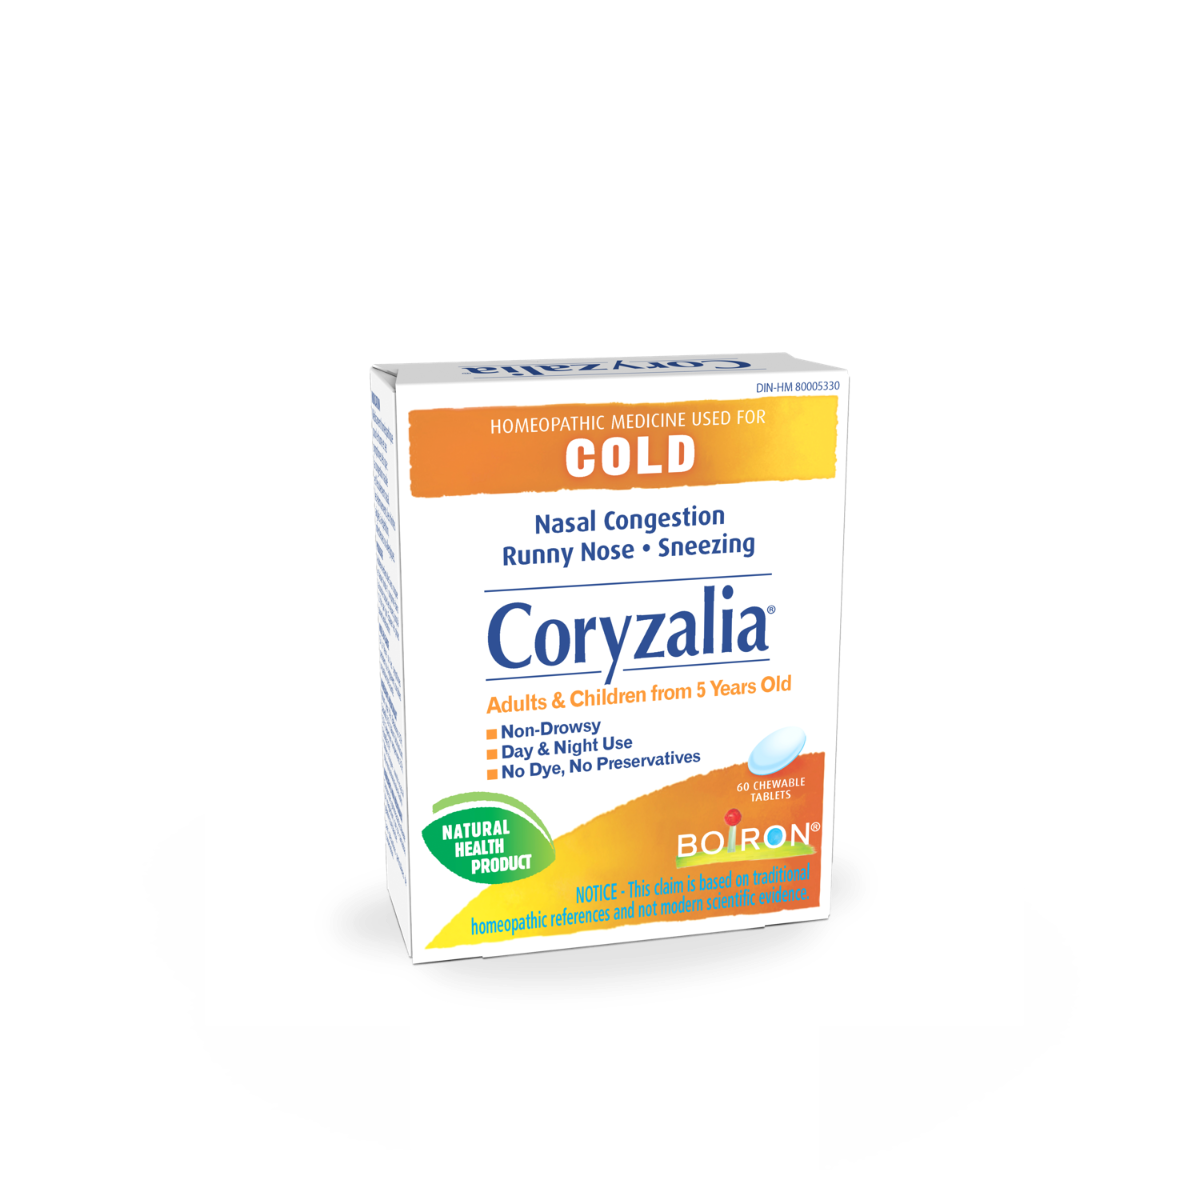 Coryzalia homeopathic medicine for colds